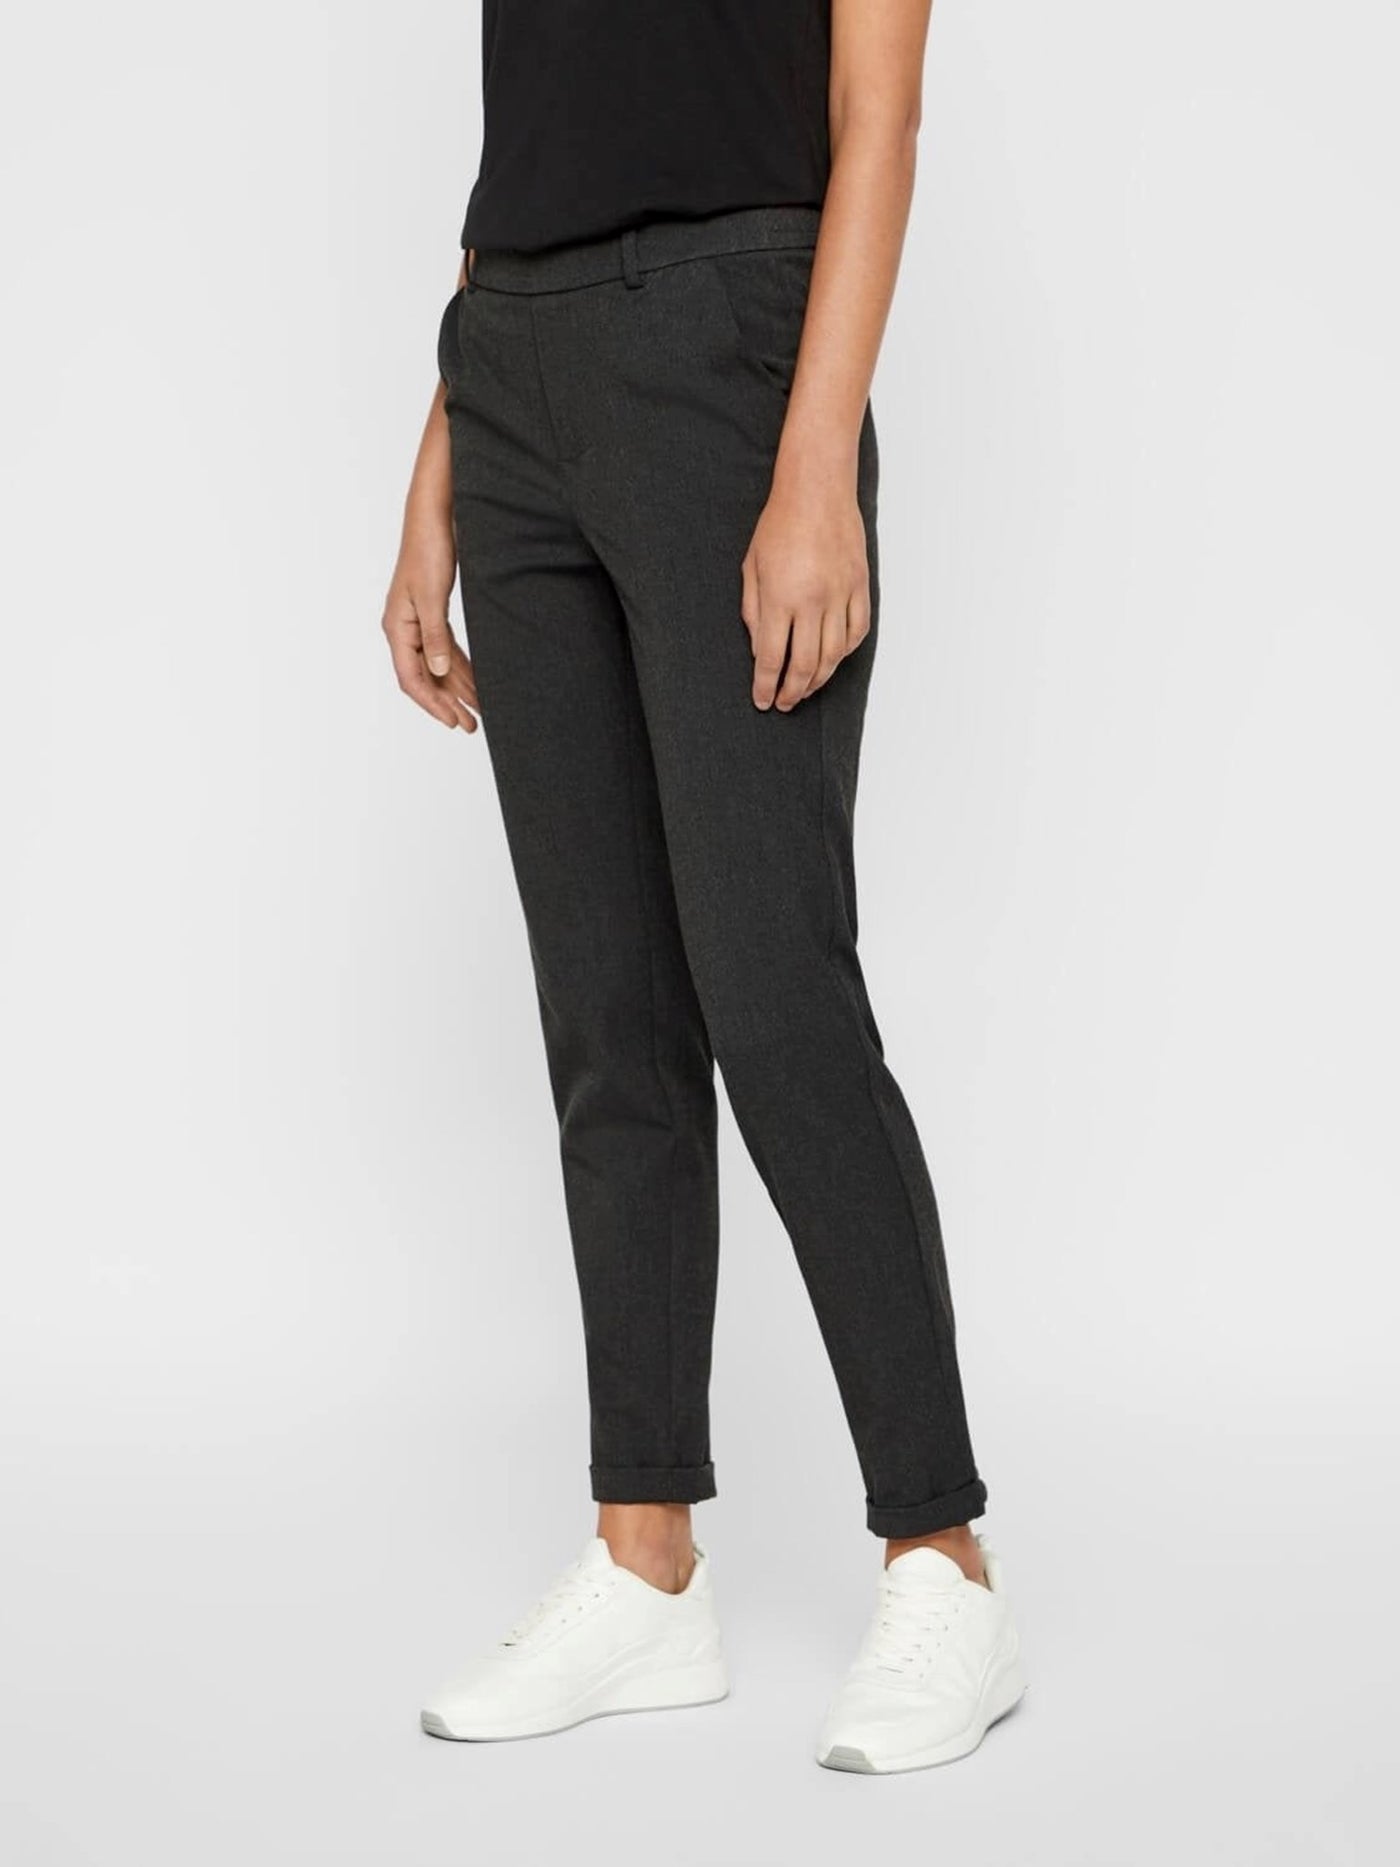 Maya Trousers (wide model) - Dark Grey - Vero Moda - Grey 2